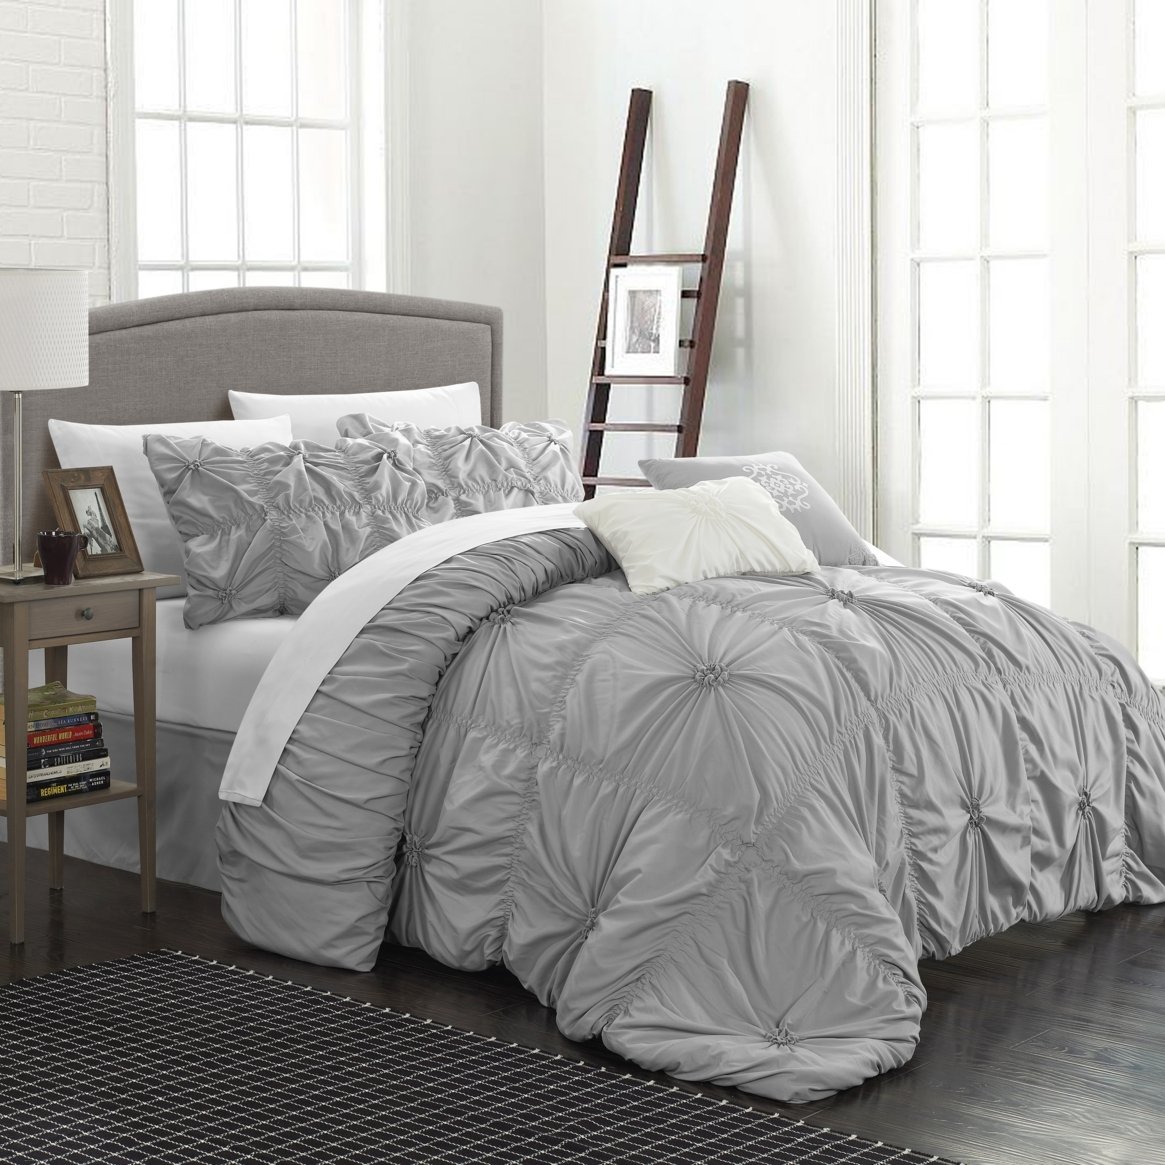 Hilton 10 Piece Comforter Set Floral Pinch Pleated Ruffled Designer Embellished Bed In A Bag Bedding - Silver, King